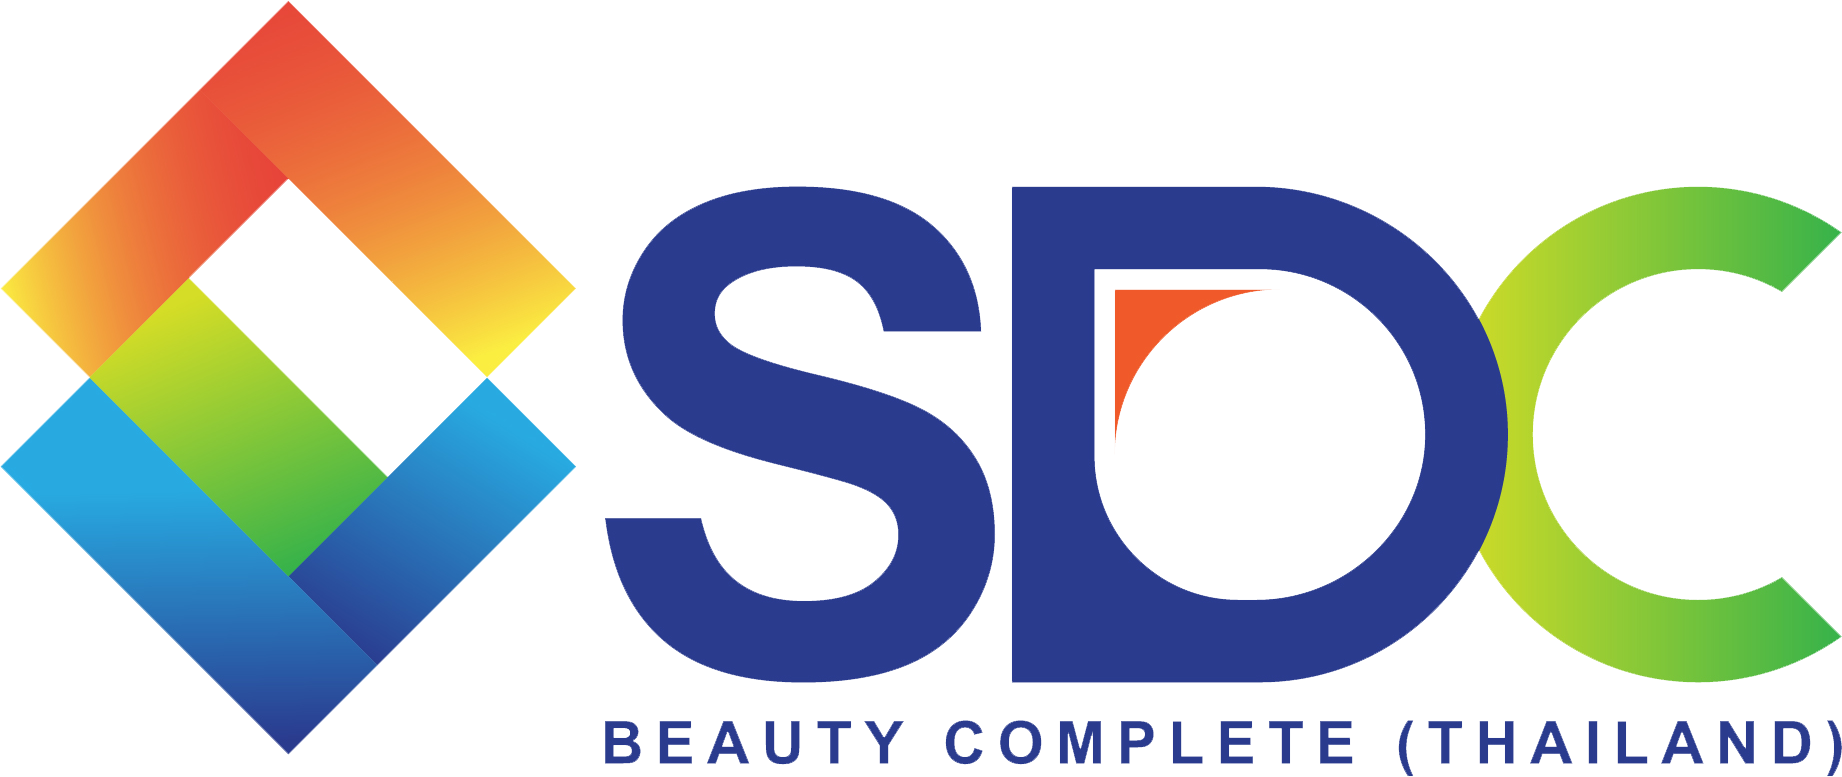 SDC Beauty Complete Co., Ltd.